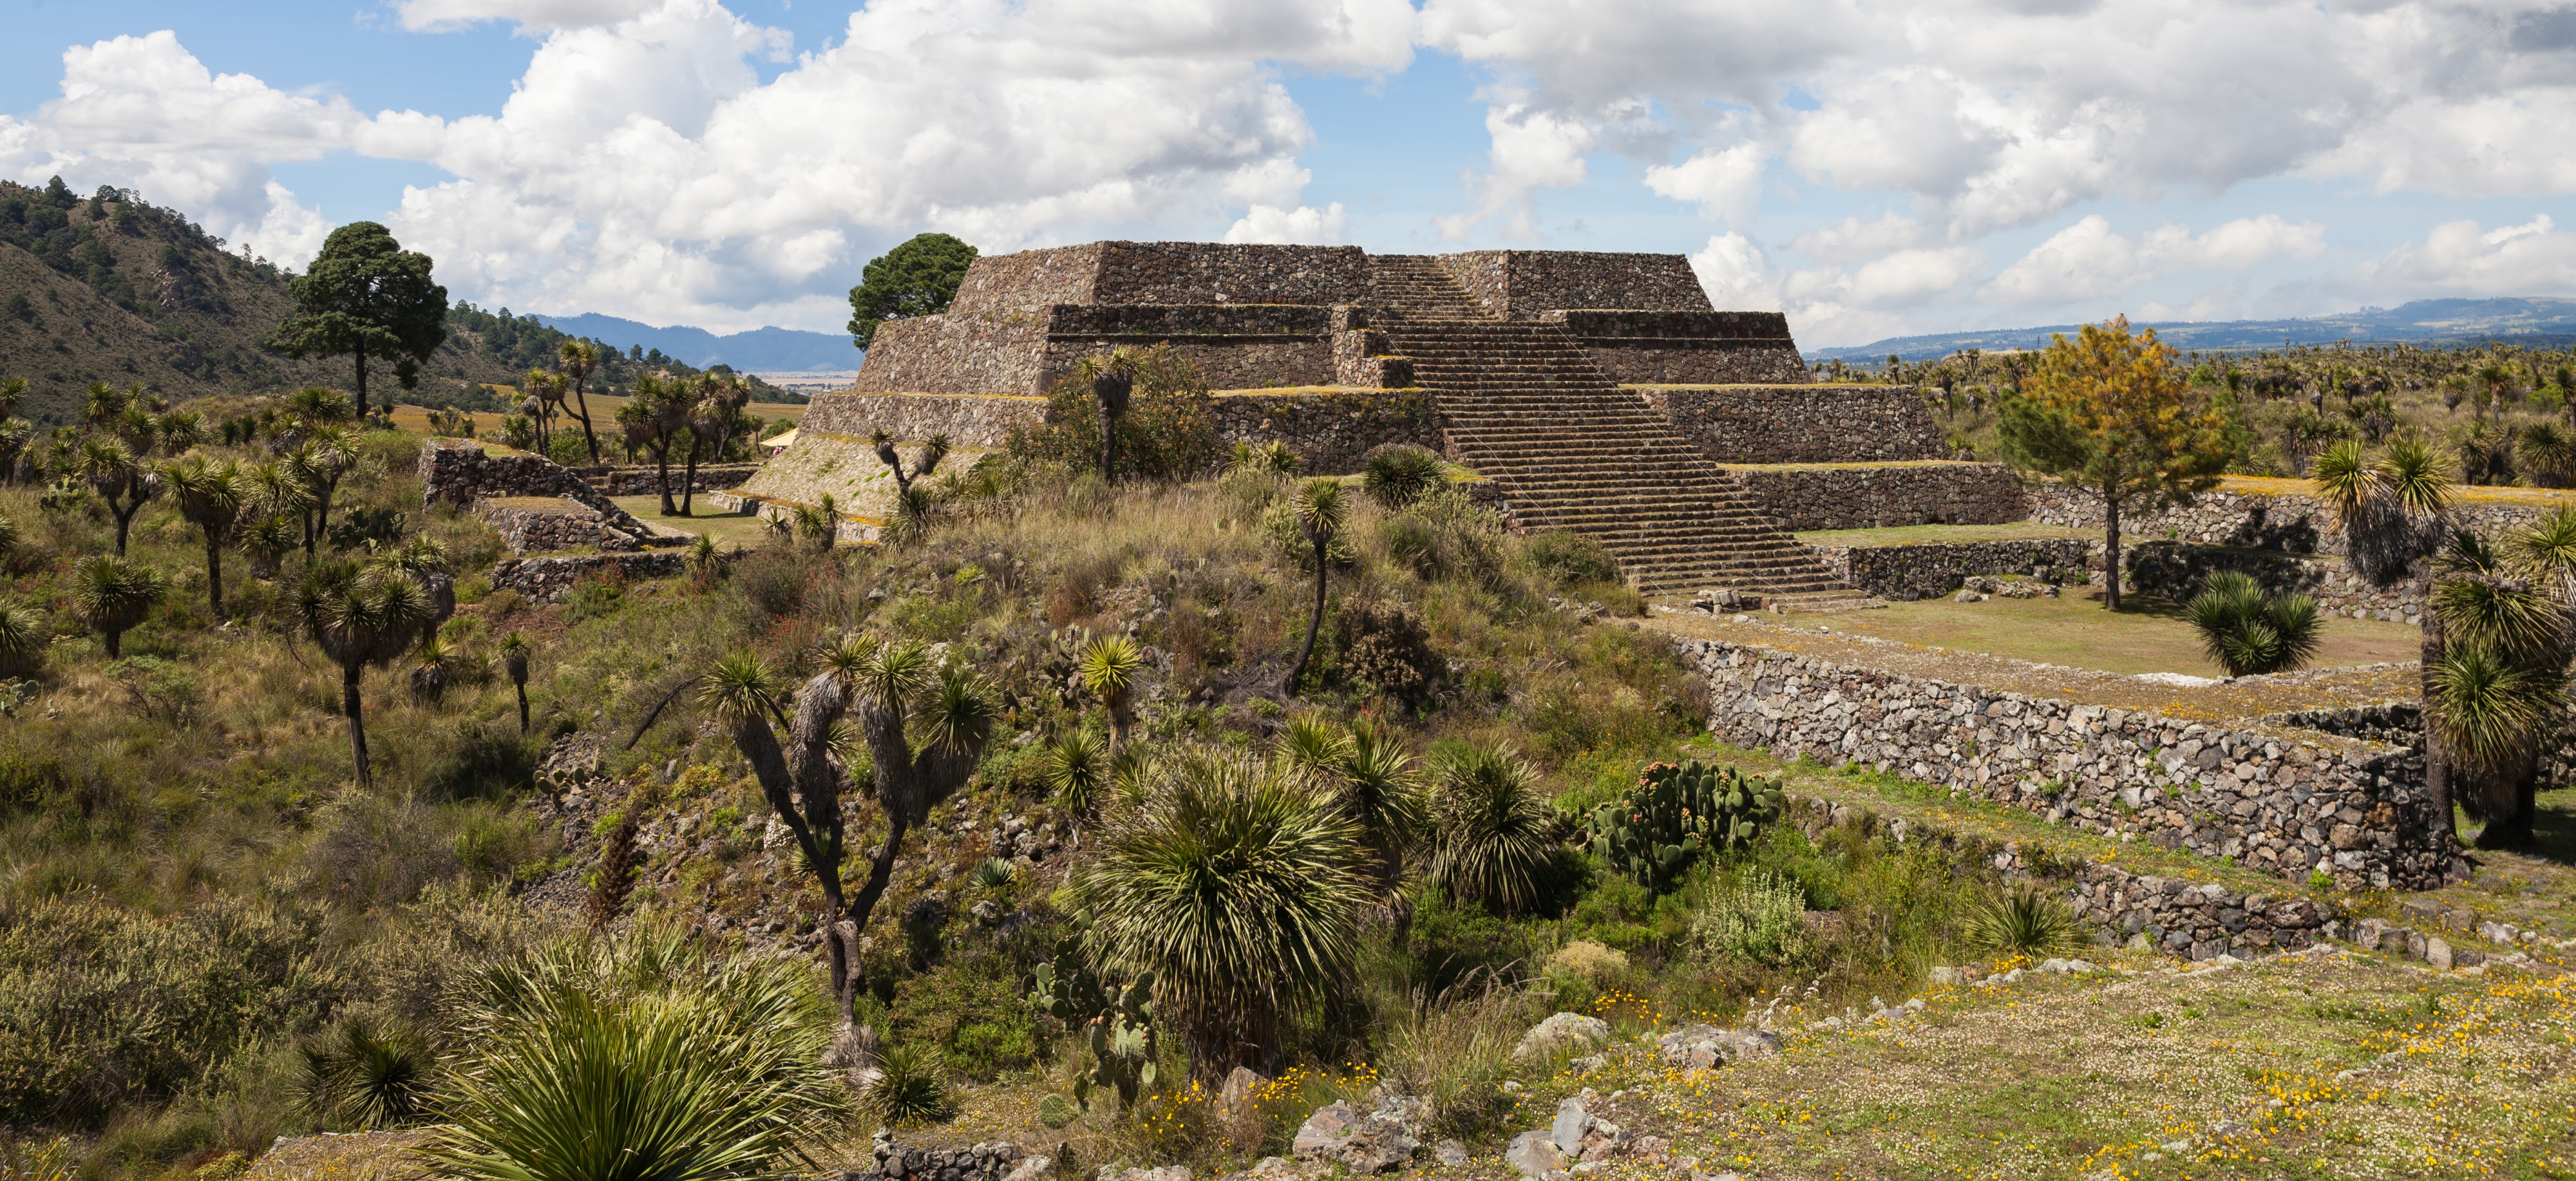 Zona arqueológica de Cantona, Puebla, México, 2013-10-11, DD 46